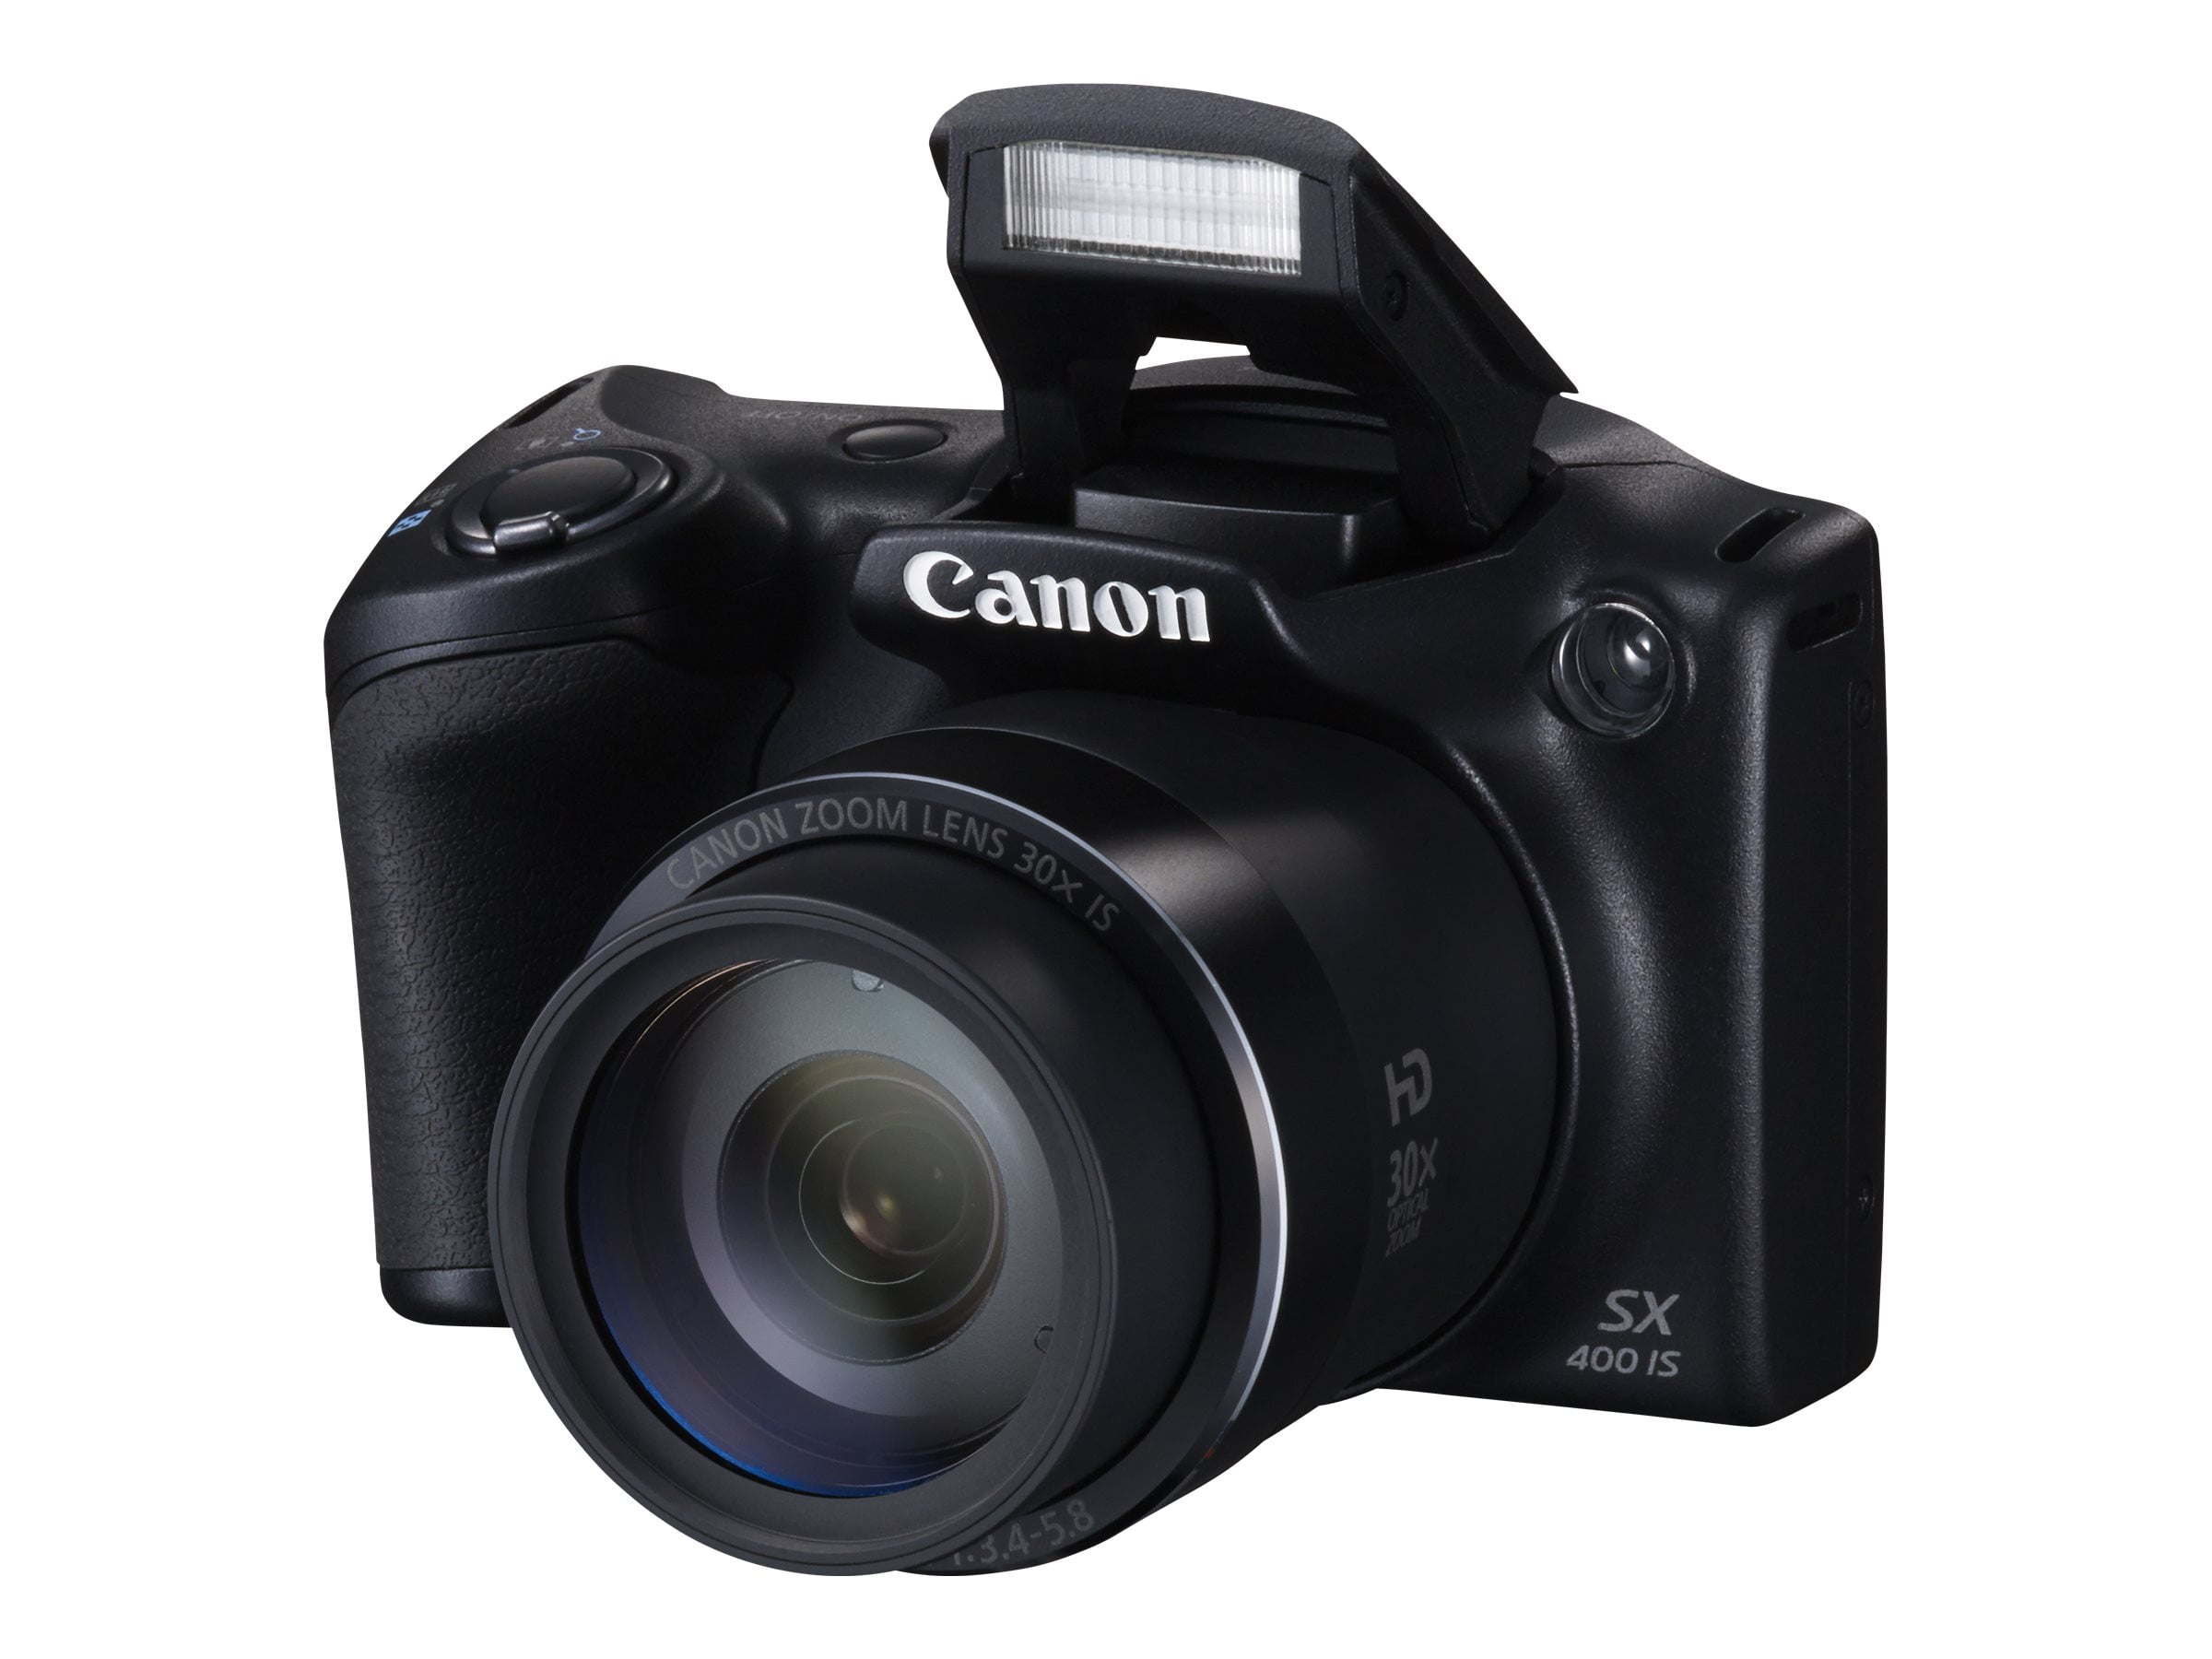 Canon PowerShot SX400 IS - Digital camera - compact - 16.0 MP - 720p